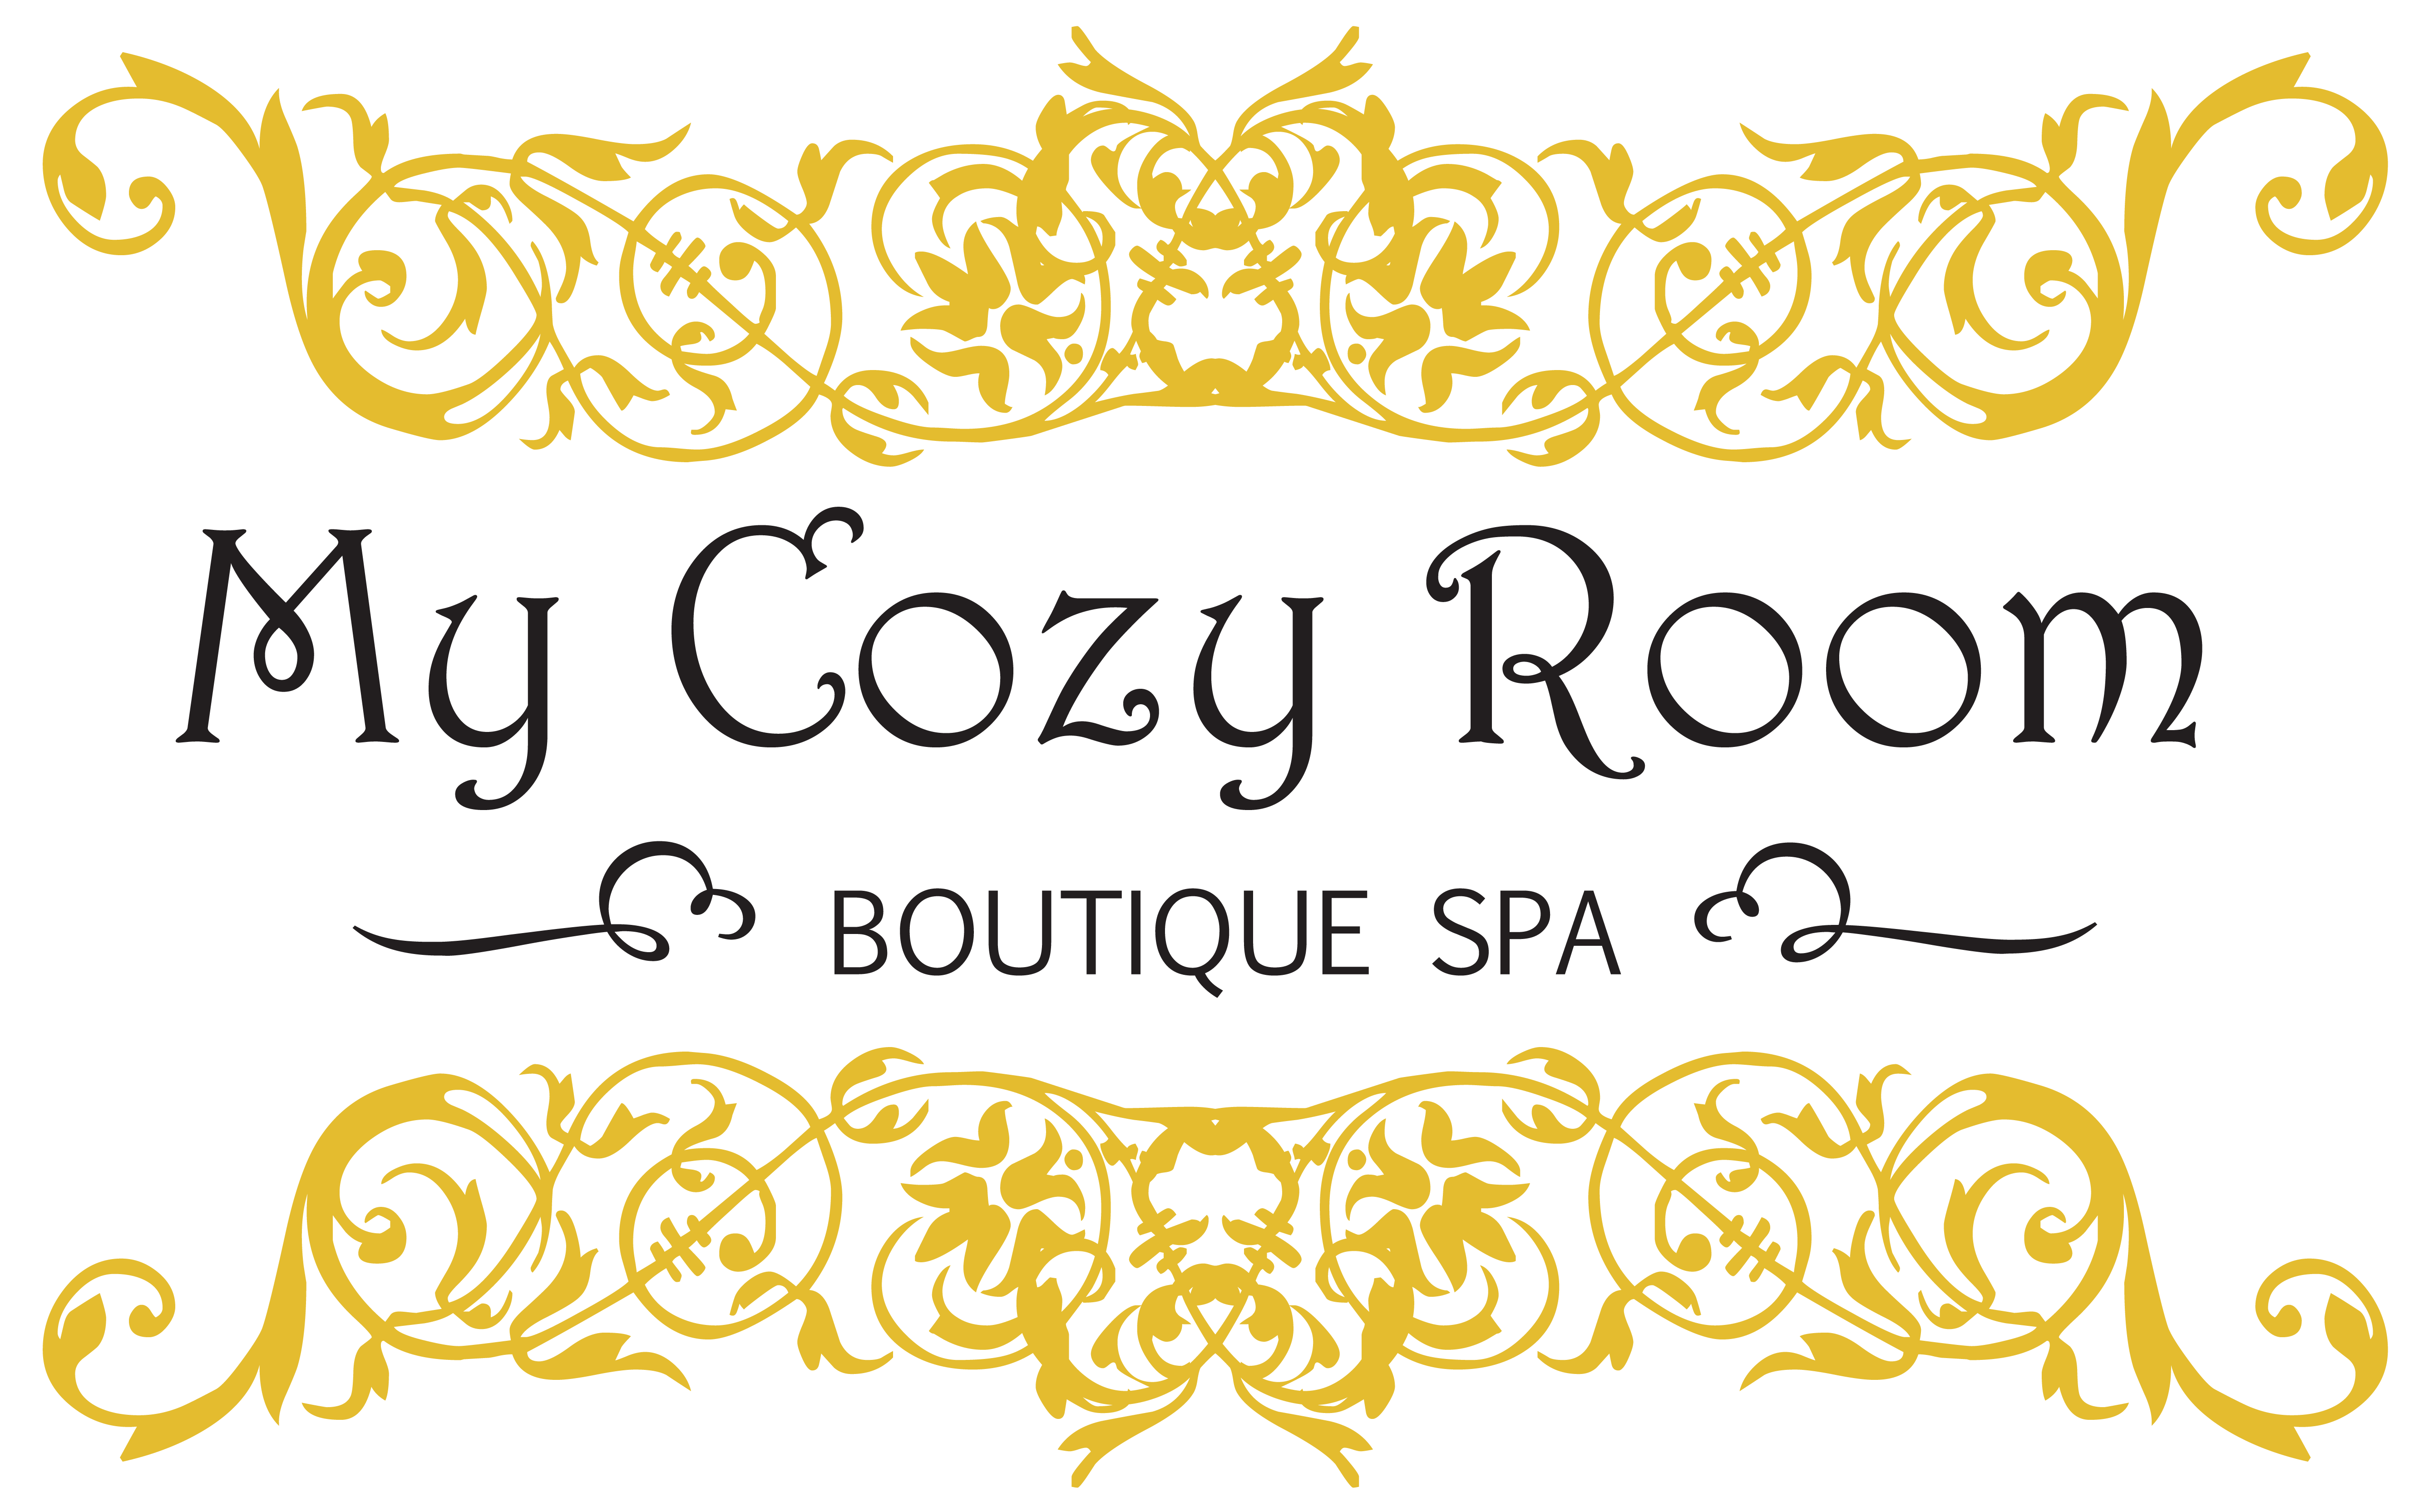 iLuxury Awards - My Cozy Room Boutique Spa